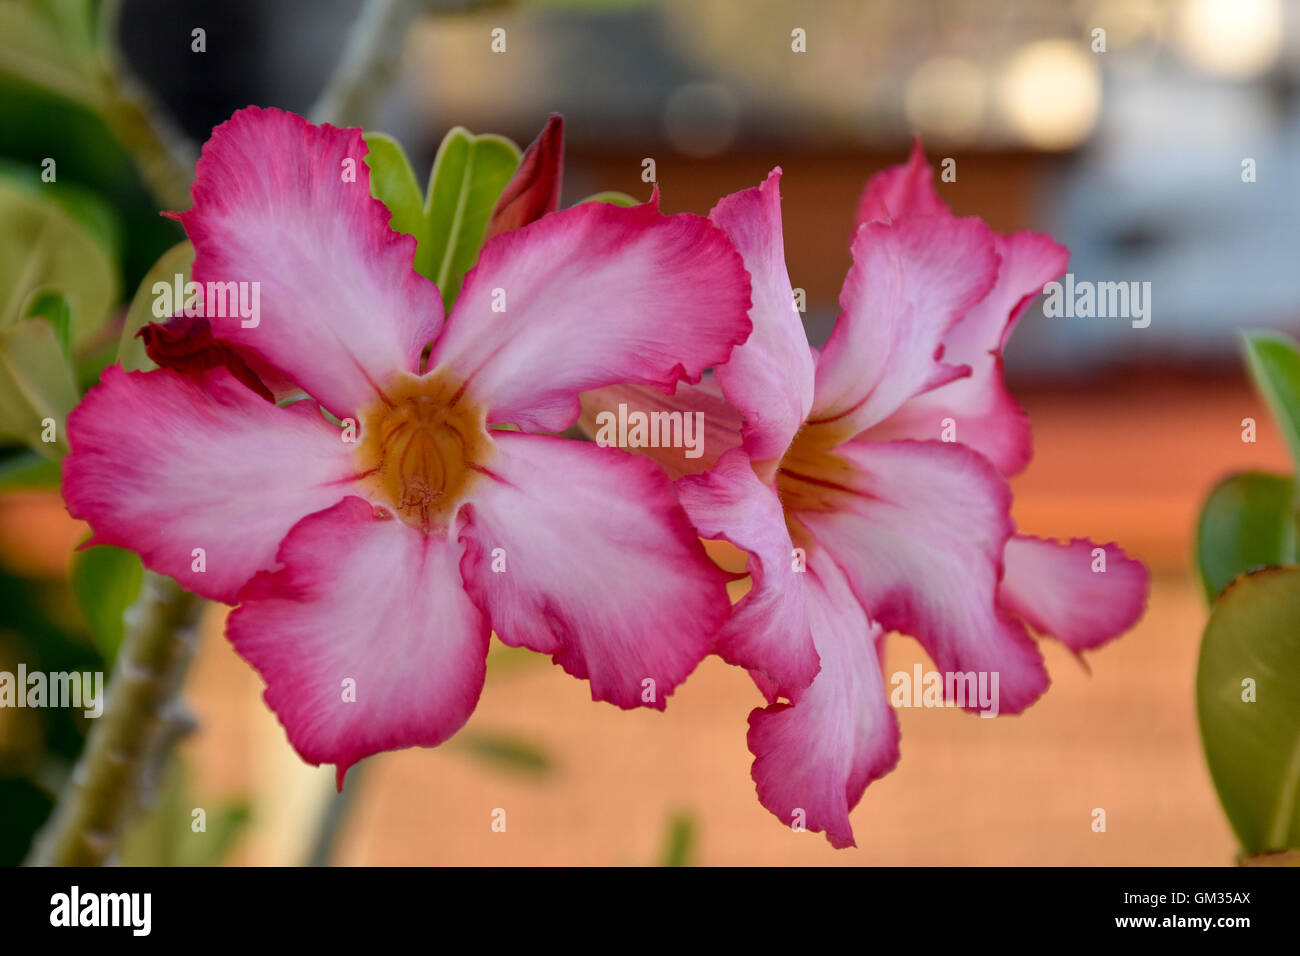 Desert Rose plant, Acapulco, Mexico. Adenium obesum is a genus of flowering plants in the Apocynum family, Apocynaceae. Stock Photo